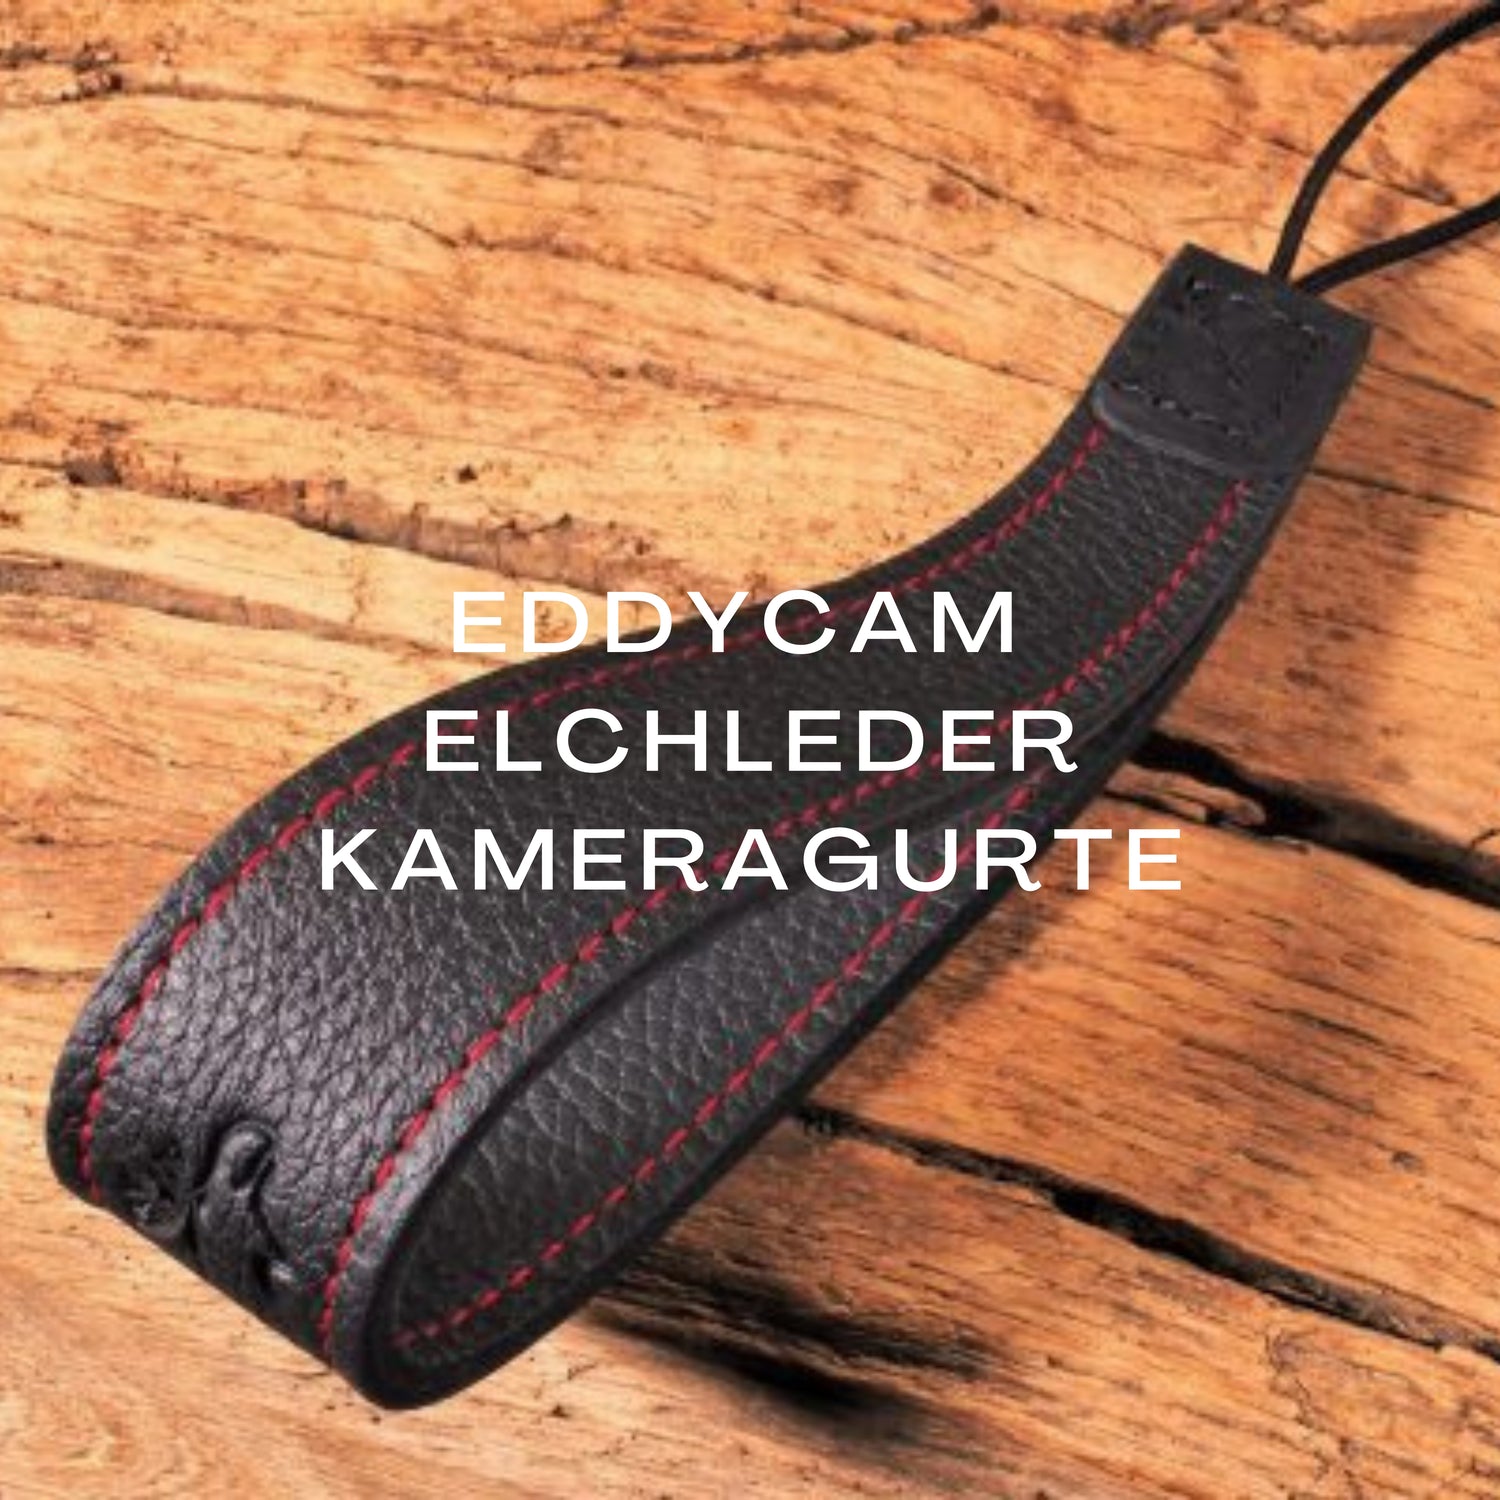 EDDYCAM - Elchleder Kameragurte